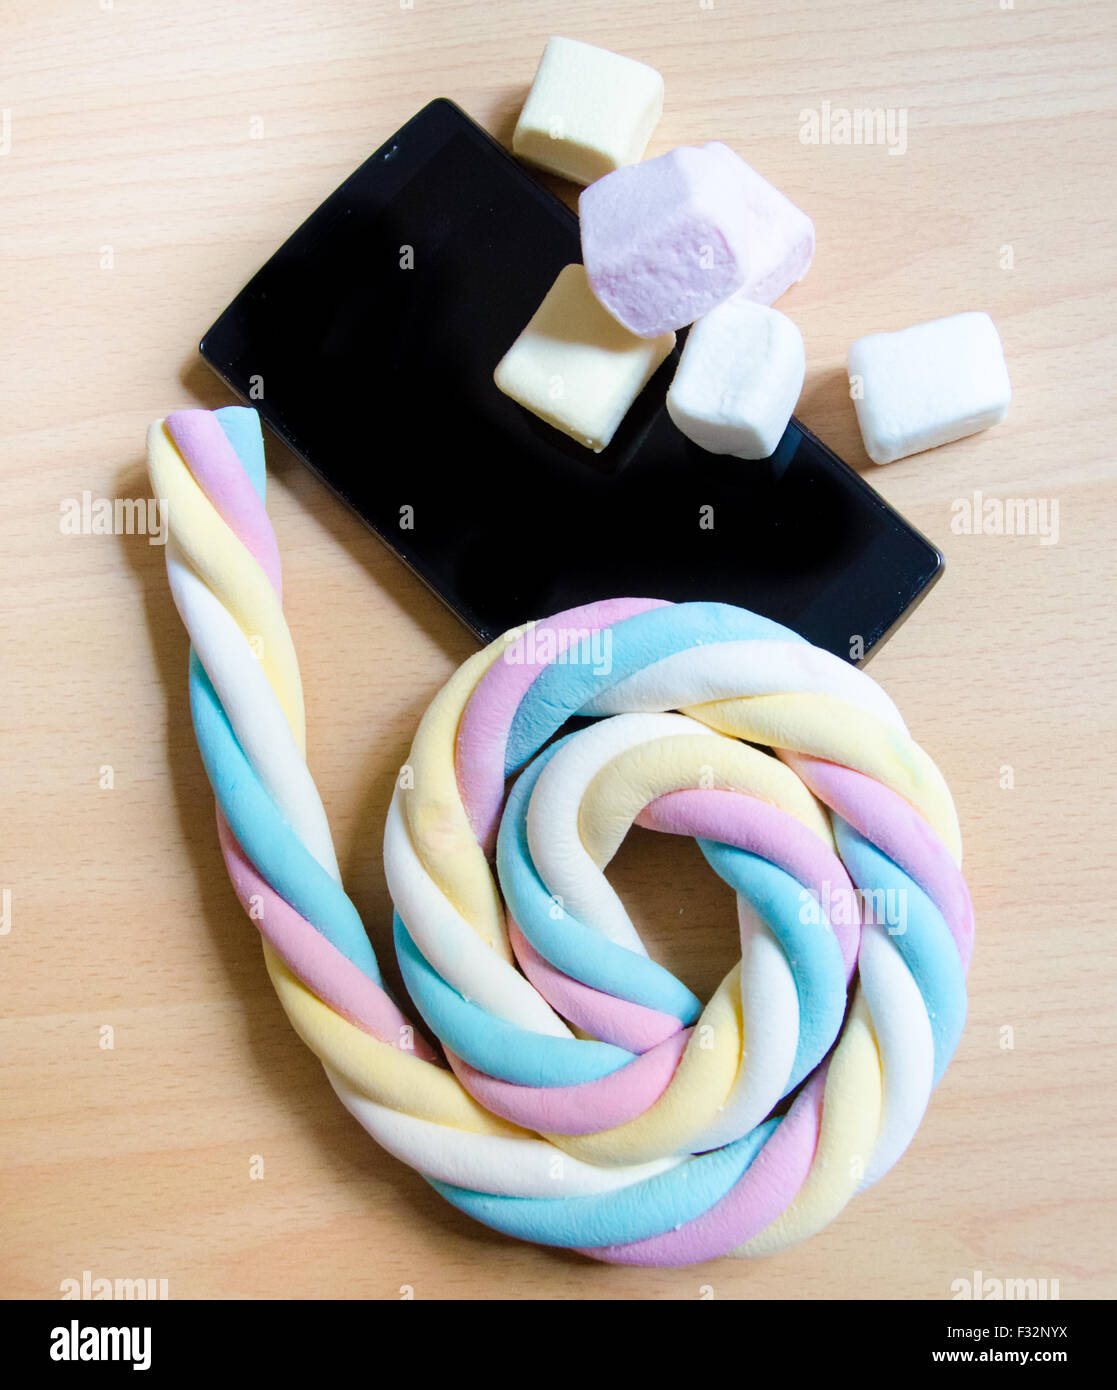 Handy mit farbigen Marshmallows Bonbons Stockfoto